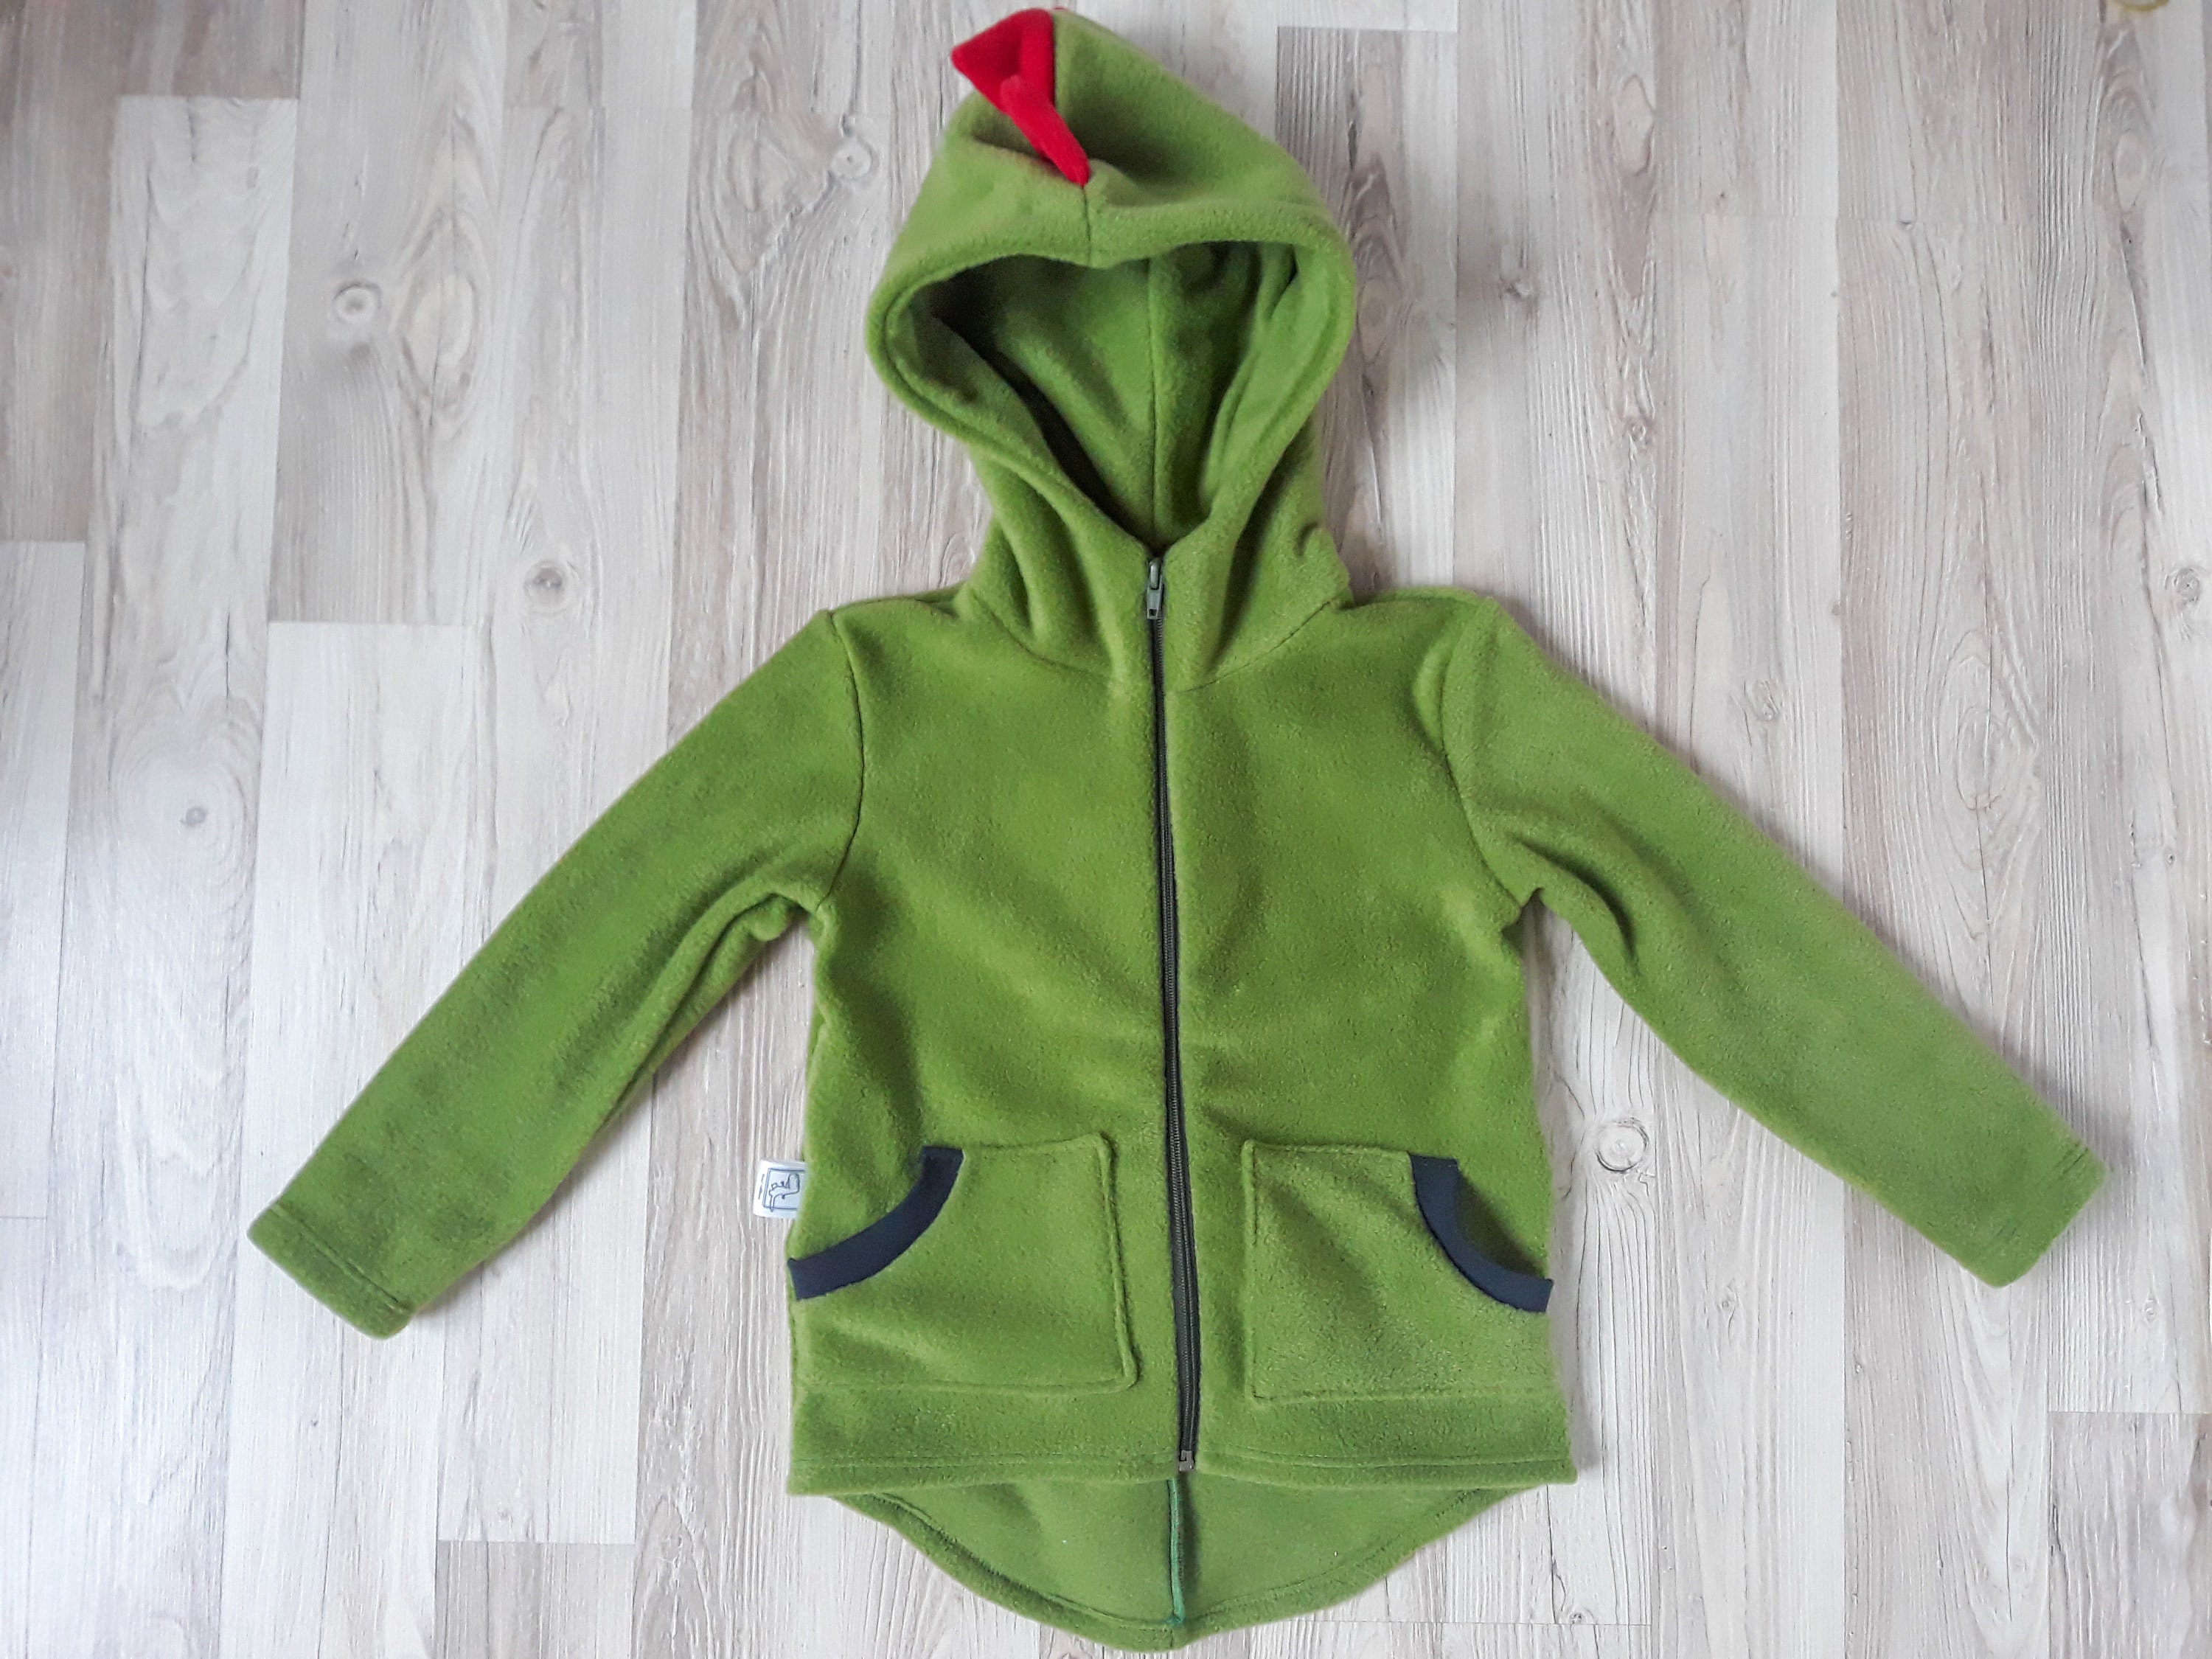 Dinosaur jacket kids hoodie dinosaur costume birthday | Etsy